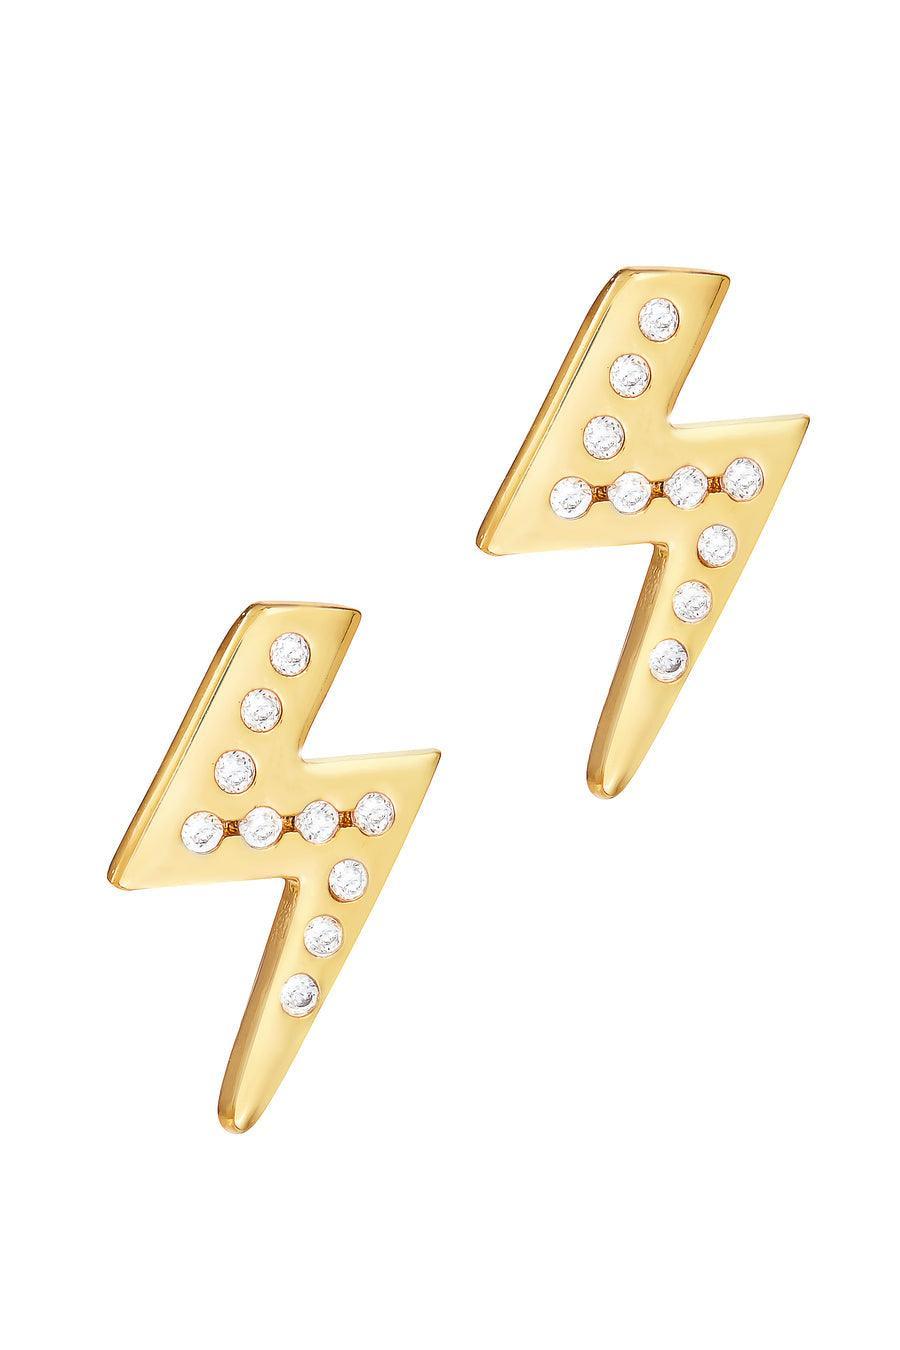 Celeste Starre - Strike Lucky Stud Earrings - 32 The Guild 